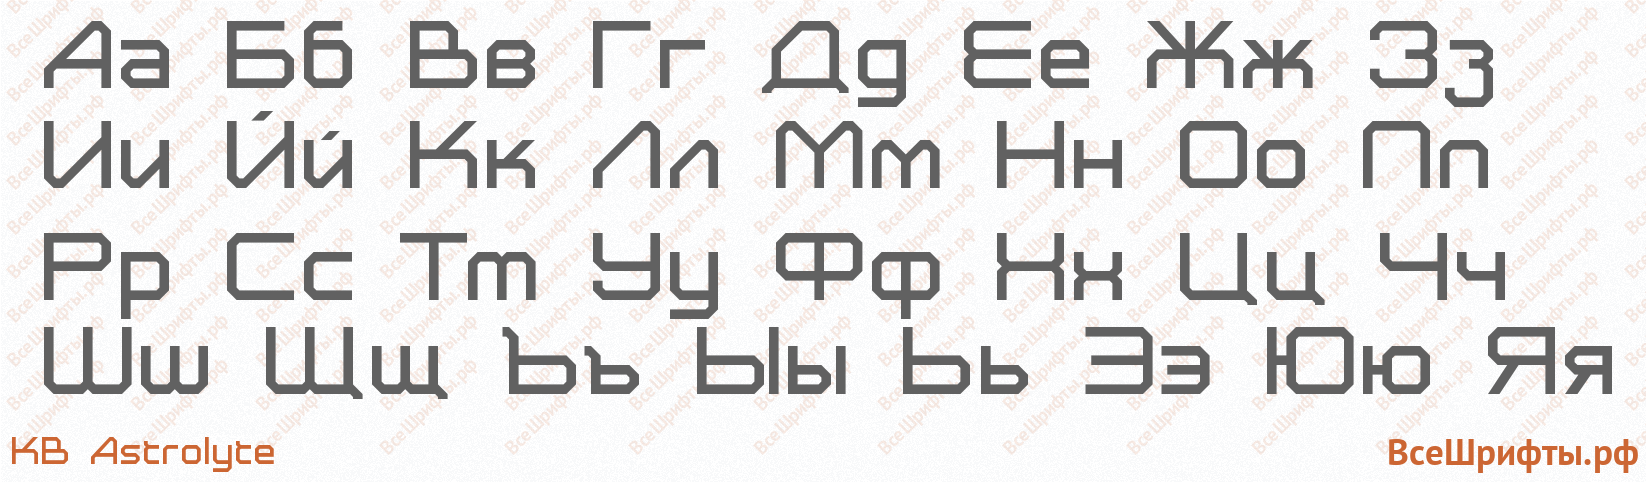 Шрифт KB Astrolyte с русскими буквами